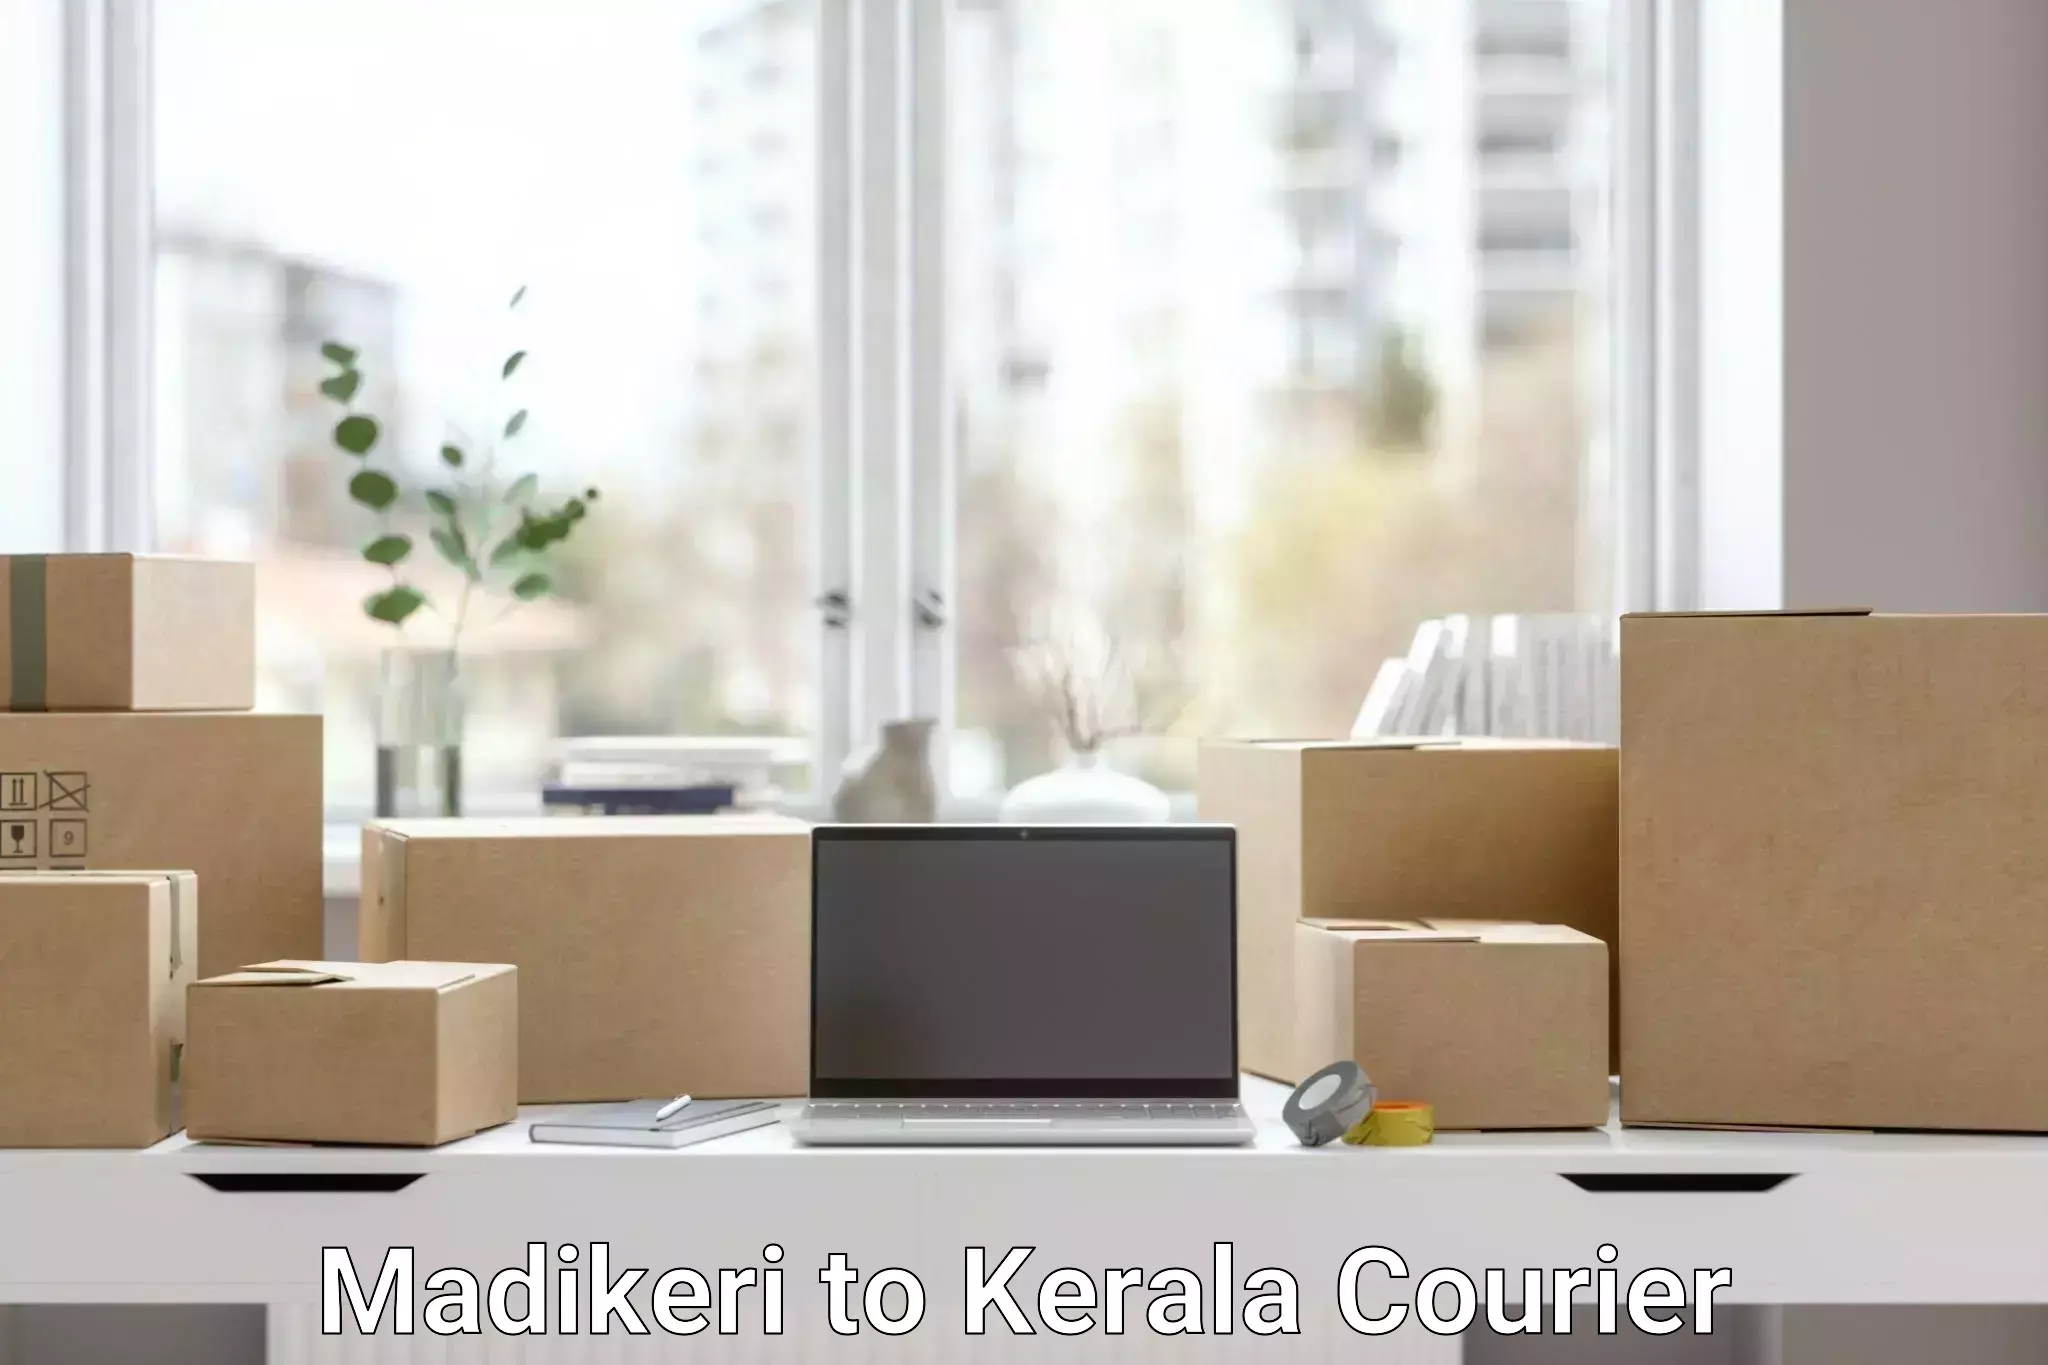 Delivery service partnership Madikeri to Koothattukulam